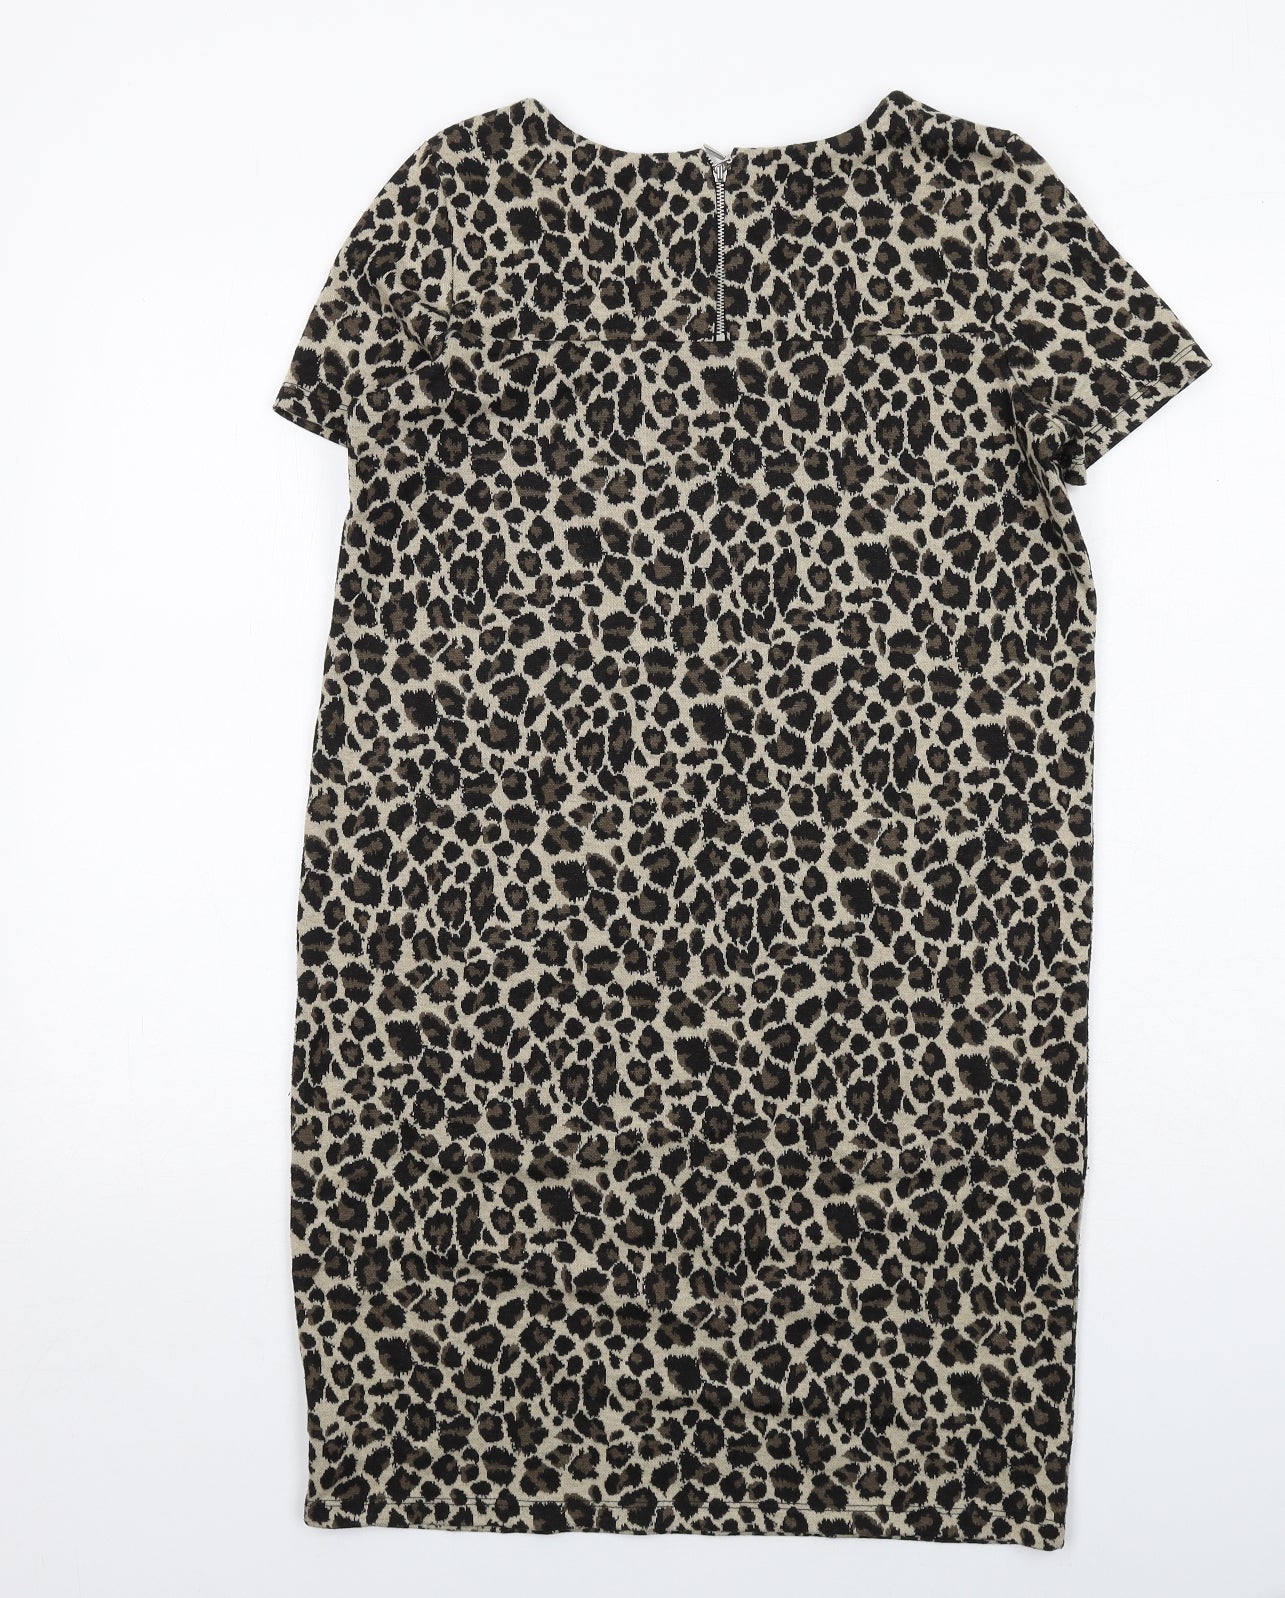 NEXT Womens Brown Animal Print Polyester T-Shirt Dress Size 10 Round Neck Zip - Leopard pattern